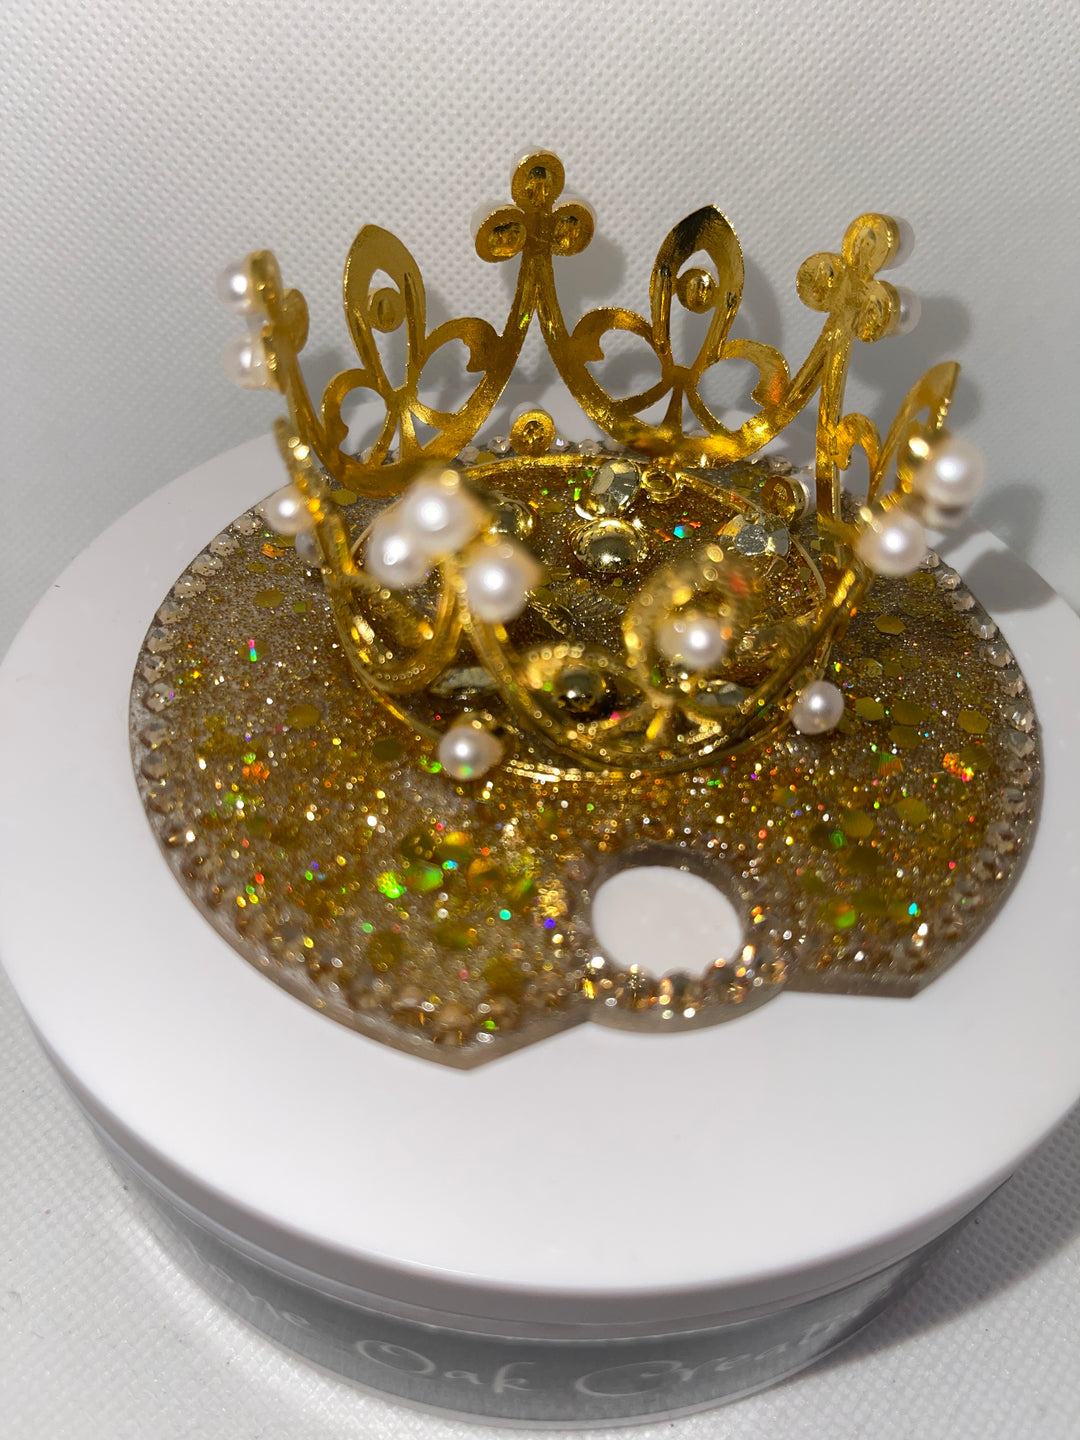 Bling Rhinestone Crown 40 oz Topper, Diva Topper, Queen Topper, Rhinestone Tumbler Lid 3D decorative tumbler lid attachment, unique gift